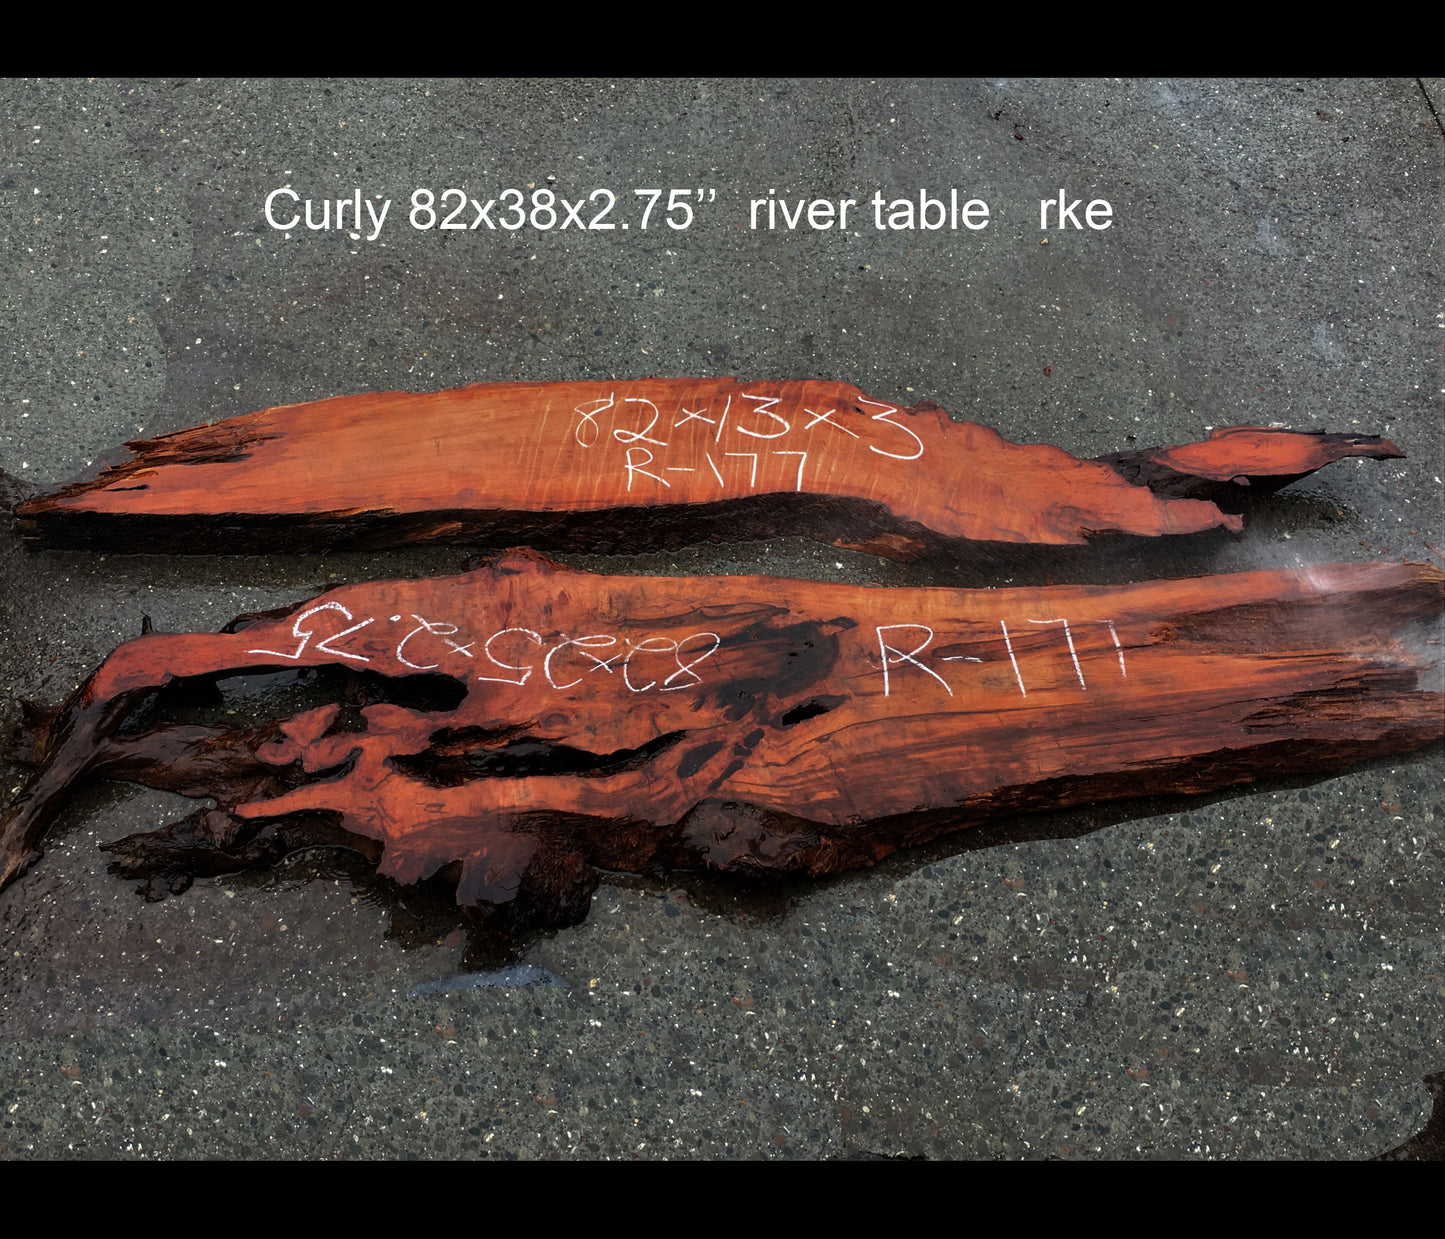 Epoxy river table | live edce slabs | redwood burl | DIY wood crafts | r-177